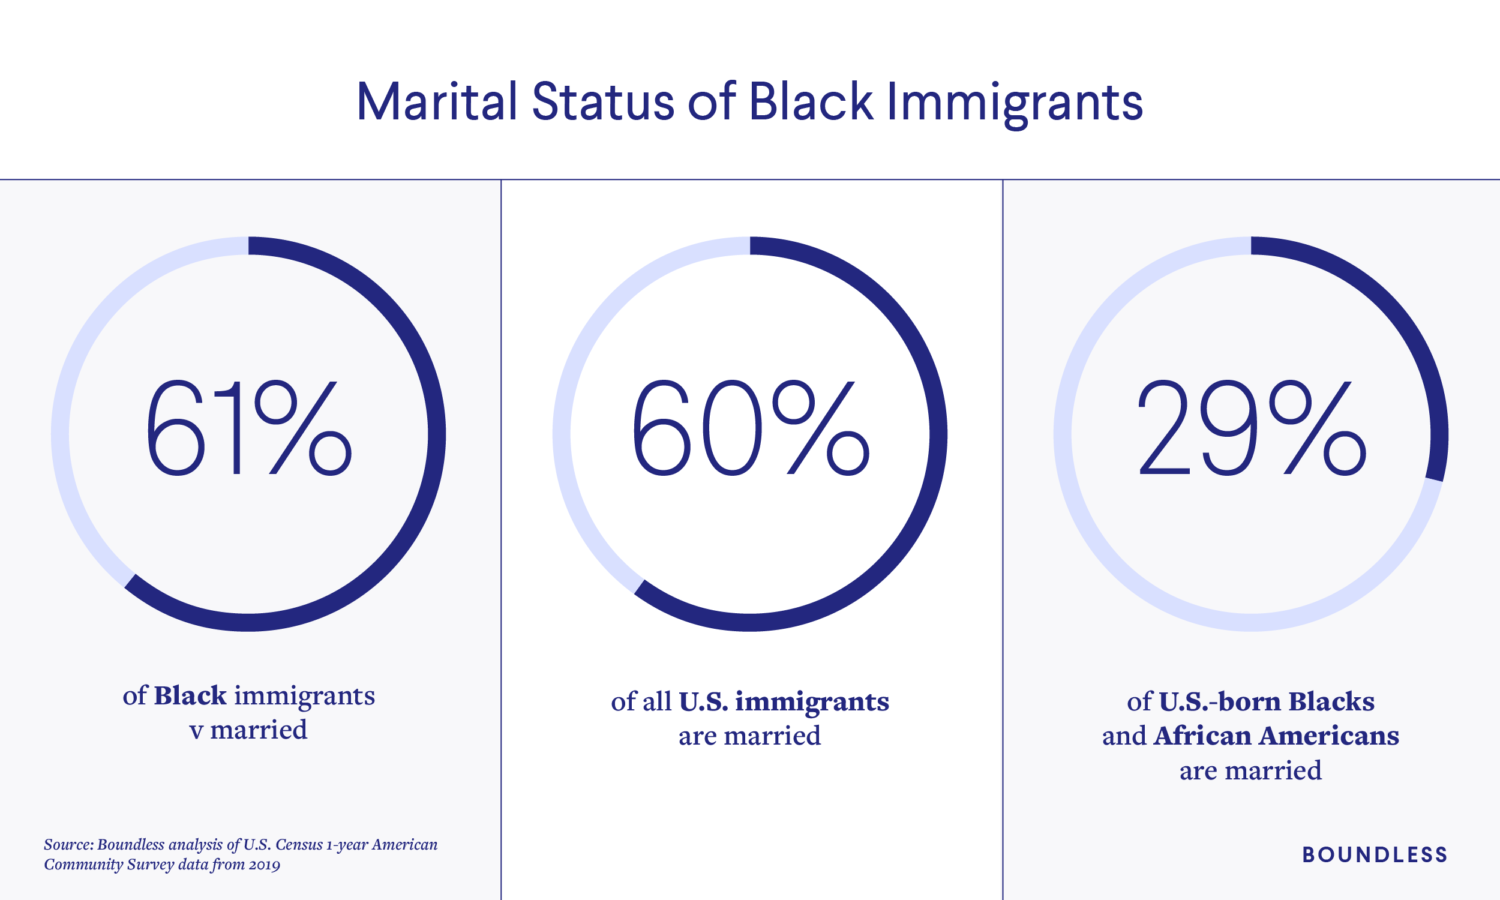 Marital Status of Black Immigrants in U.S.